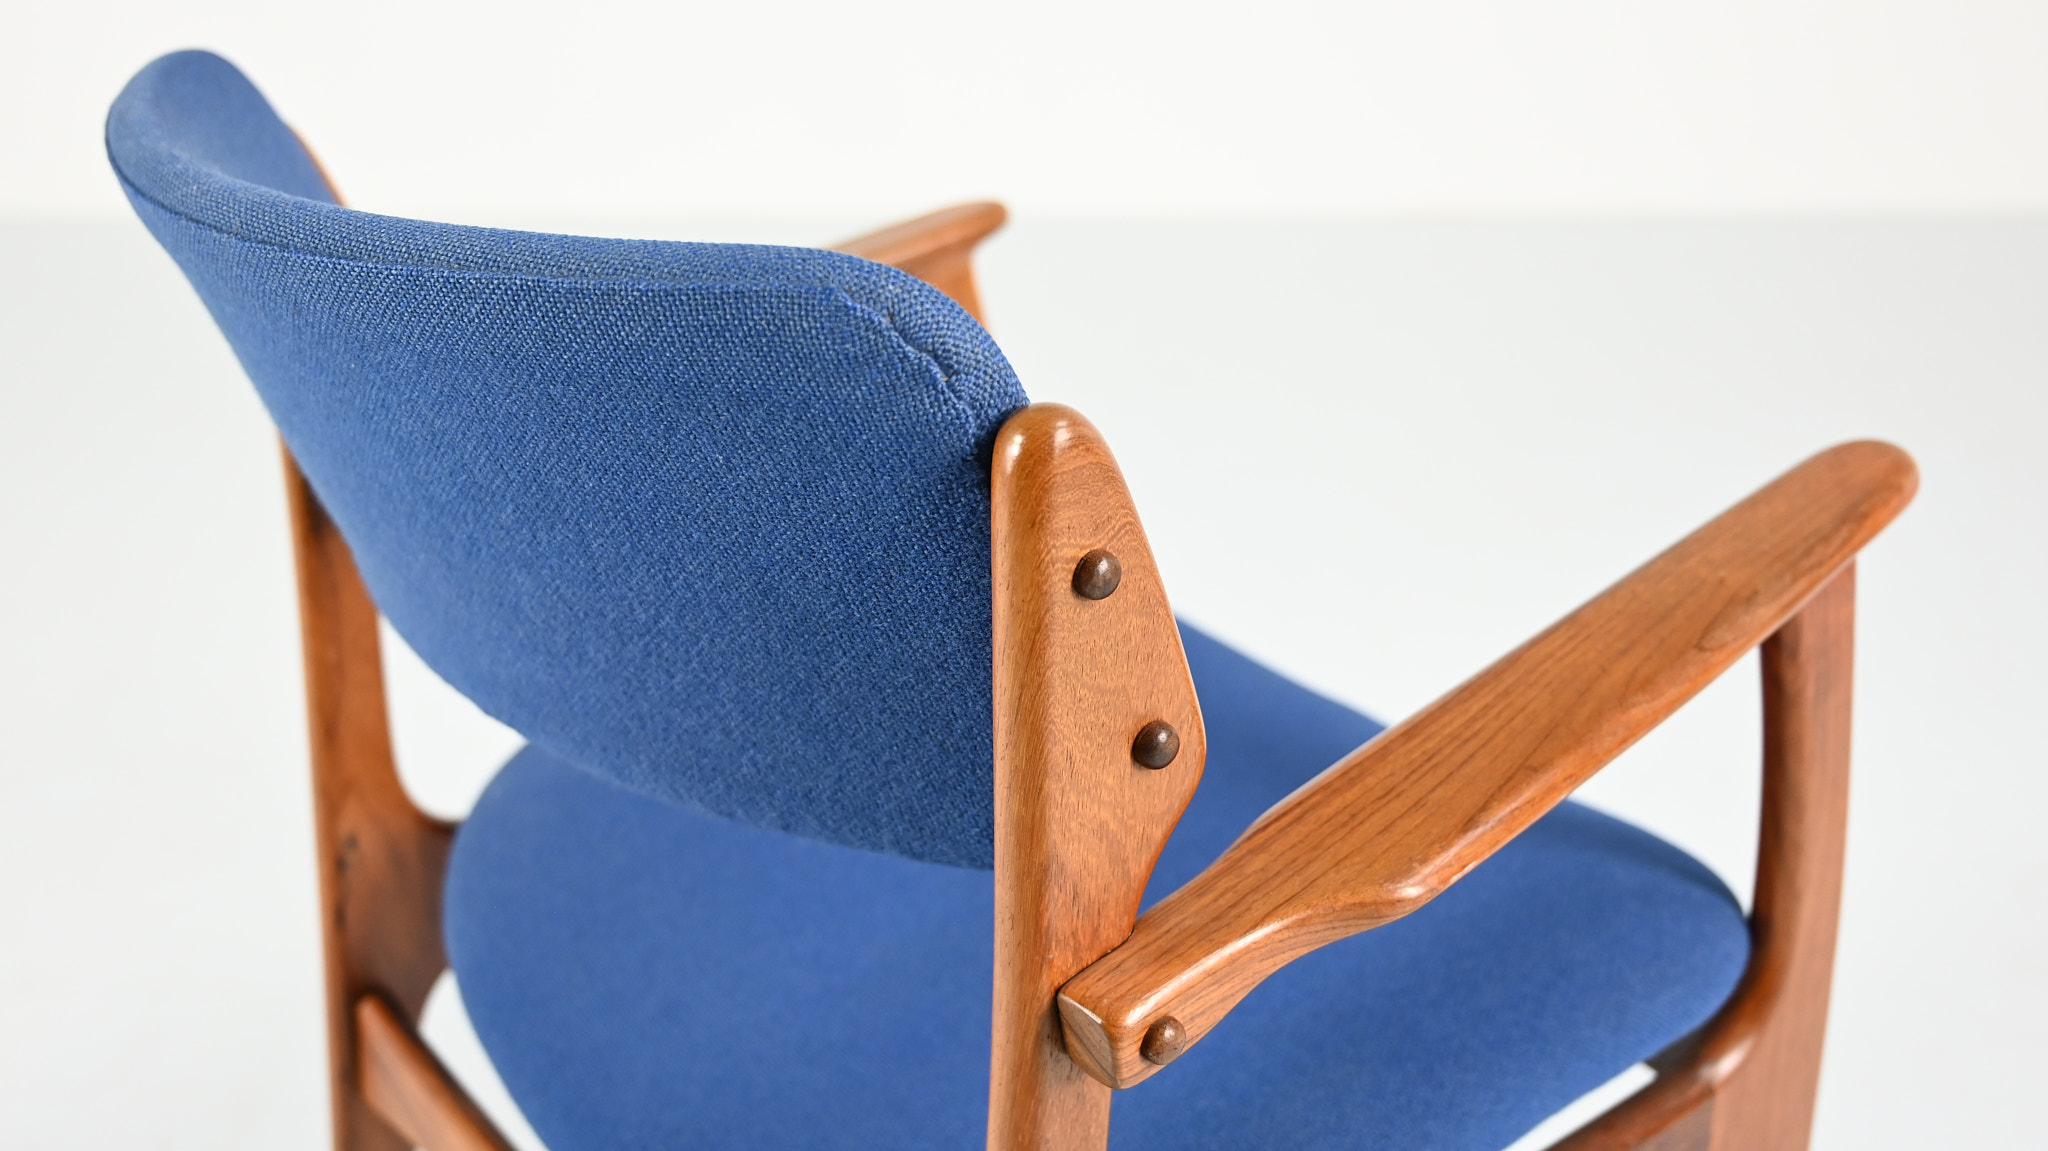 erik buch od mobler odense maskinsnedkeri model 49 armchair fauteuil chaise chaise danish design vintage retro